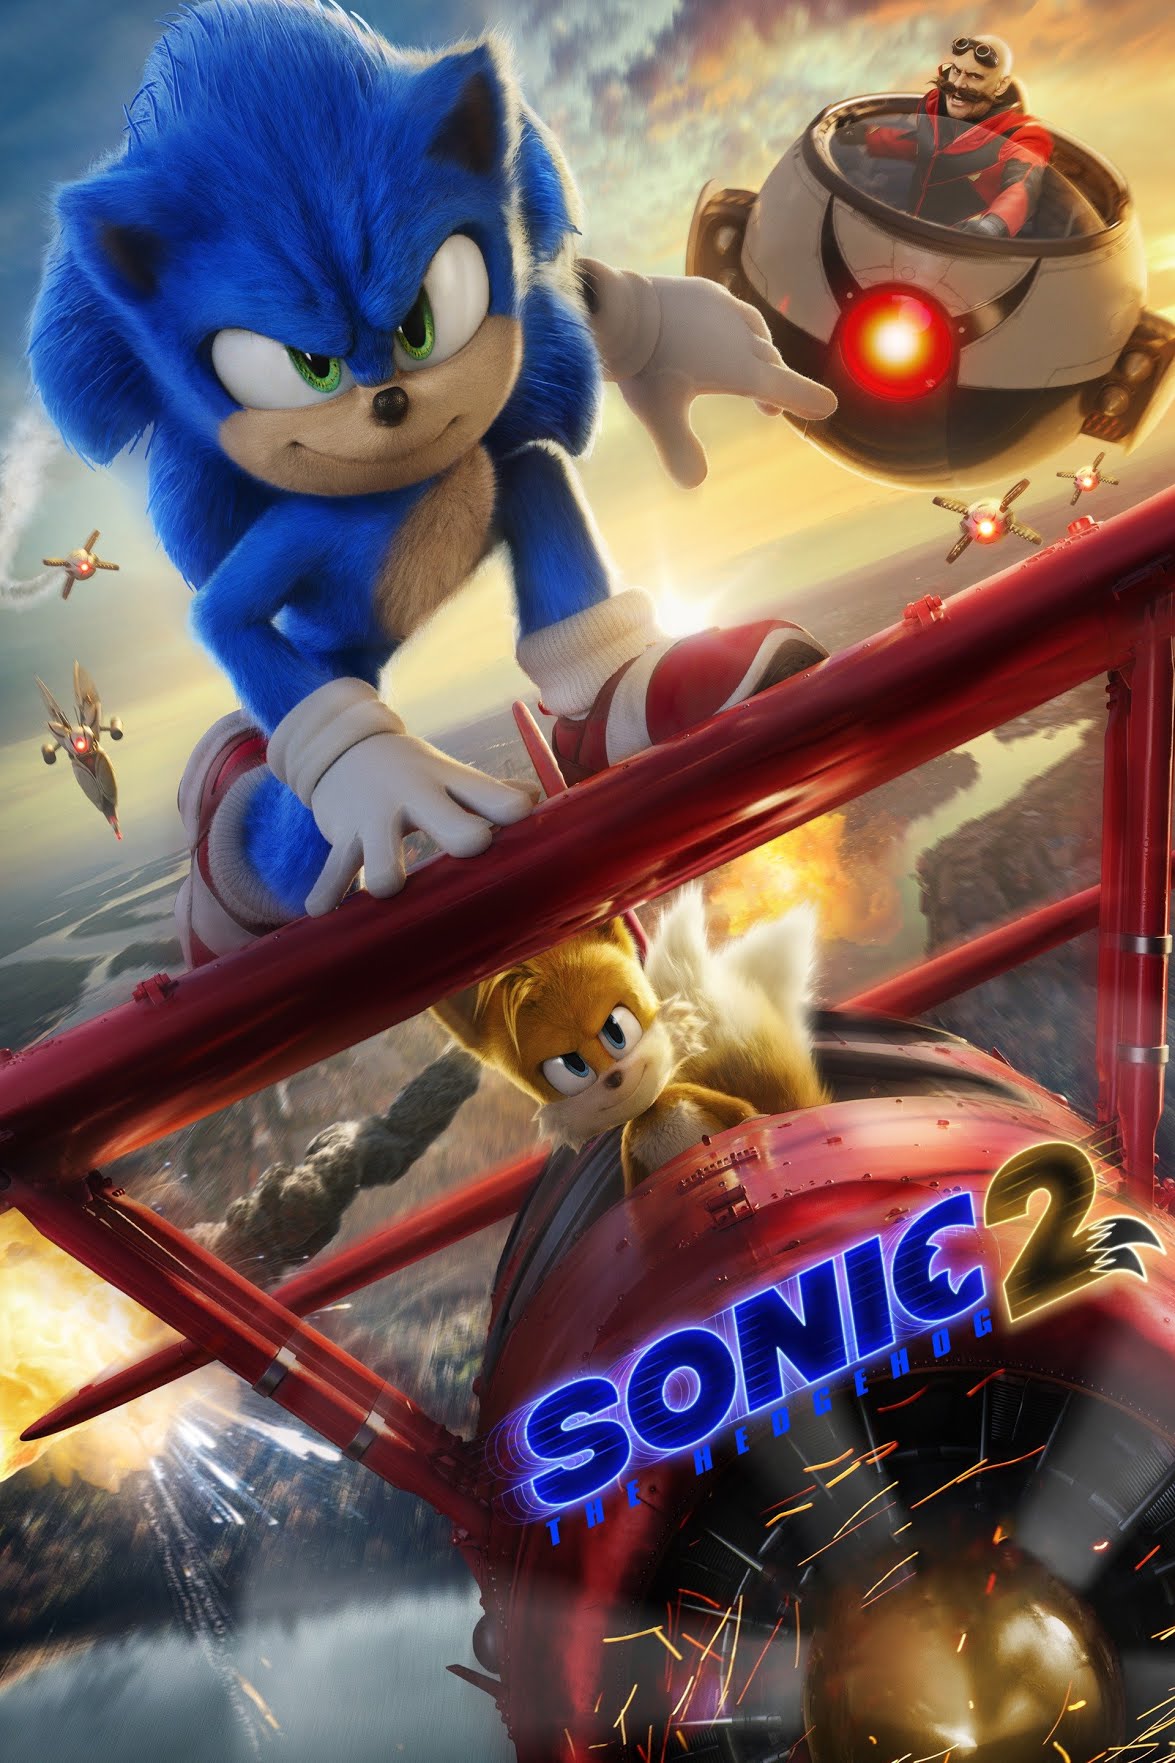  Sonic the Hedgehog 2 سونیک خارپشت 2